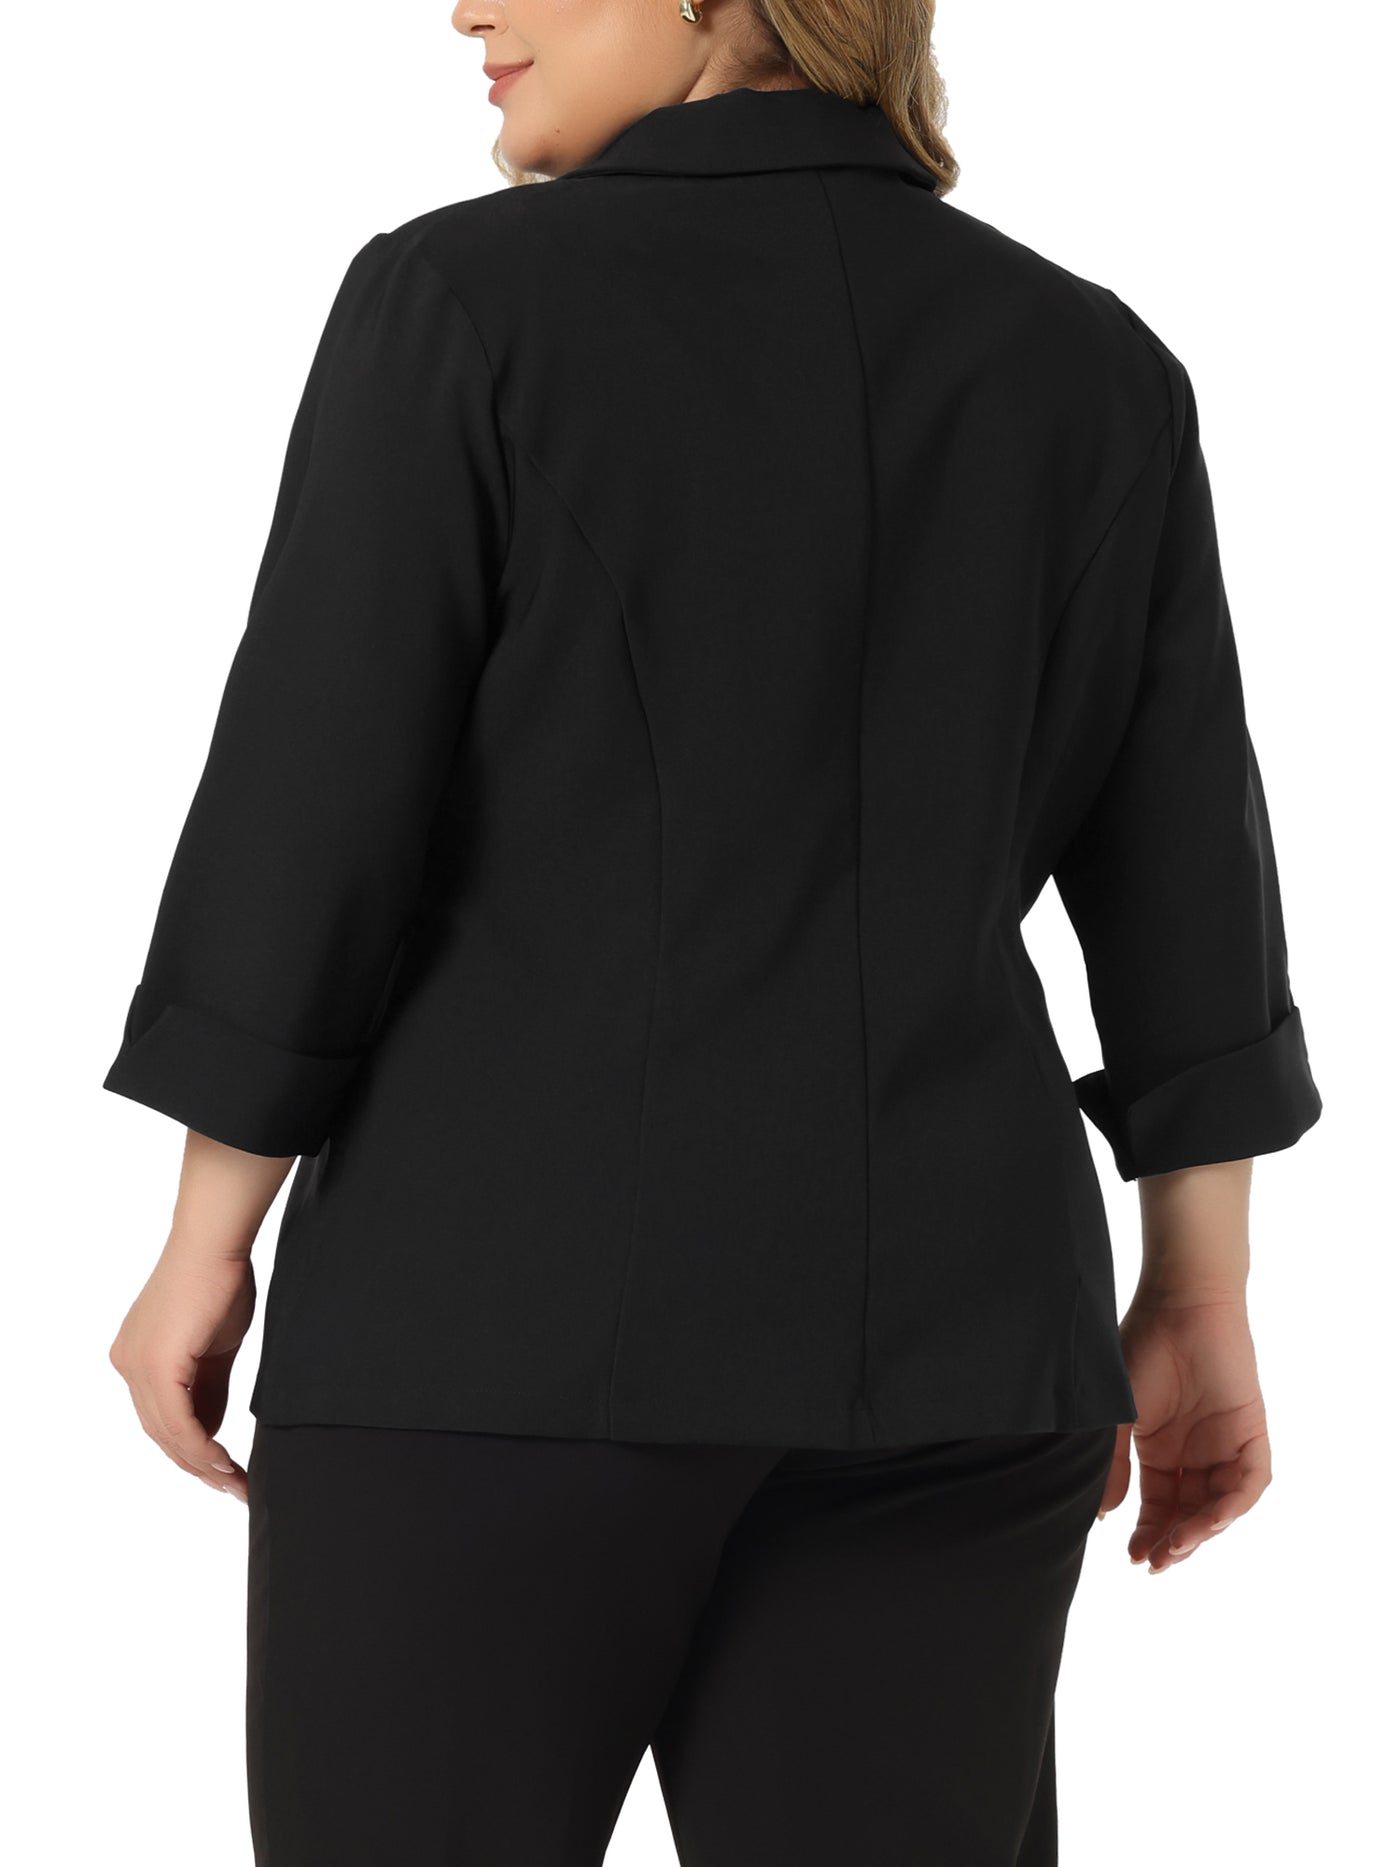 Bublédon Women's Plus Size Office Blazer Notch Panel Button Front 3/4 Sleeve Peplum Work Blazers